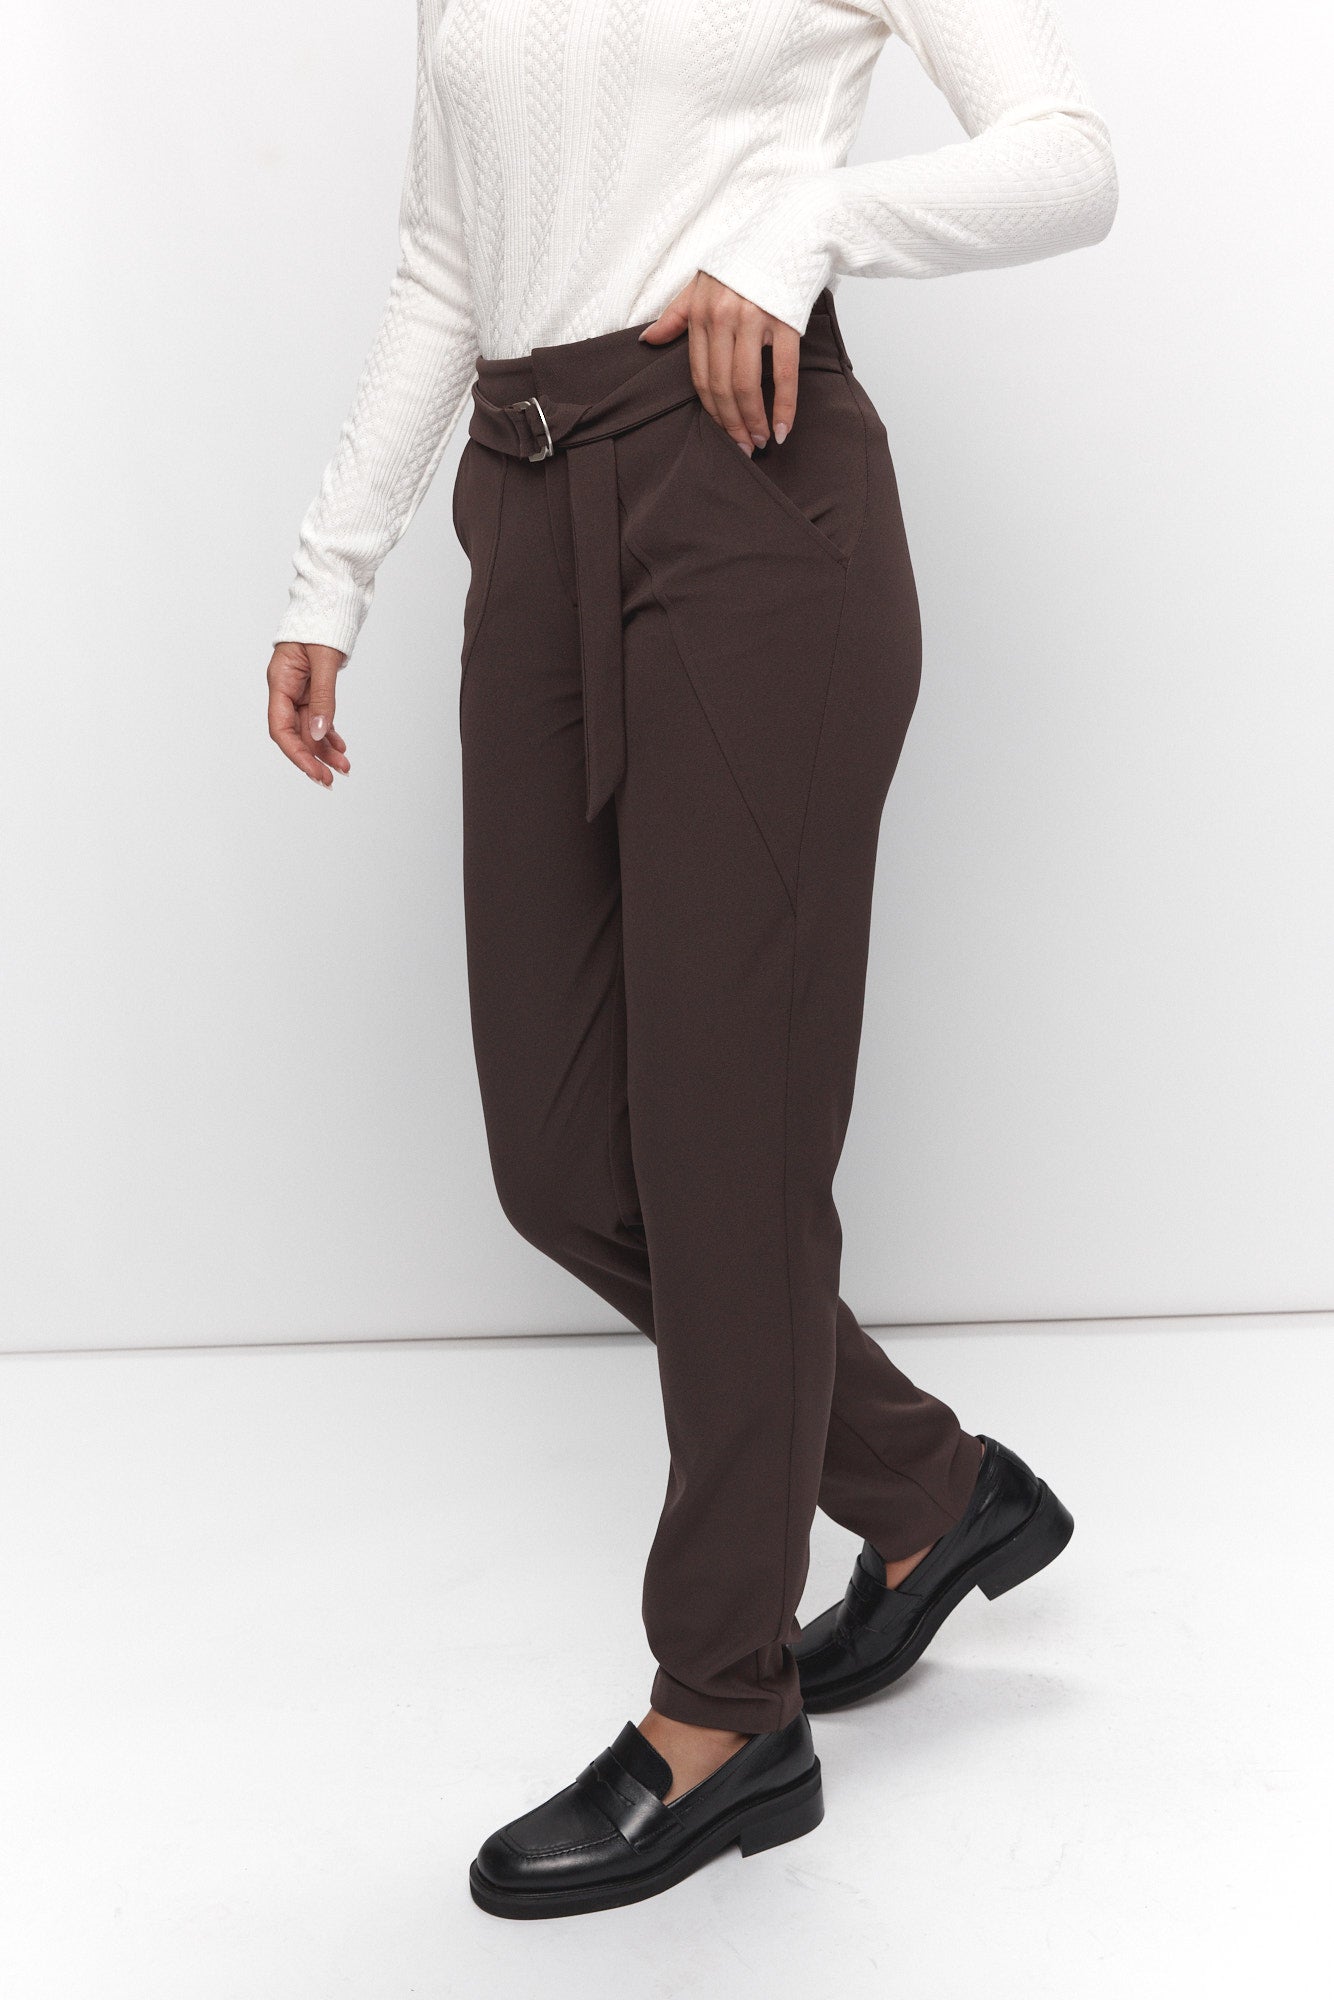 Pantalon marron | Florane